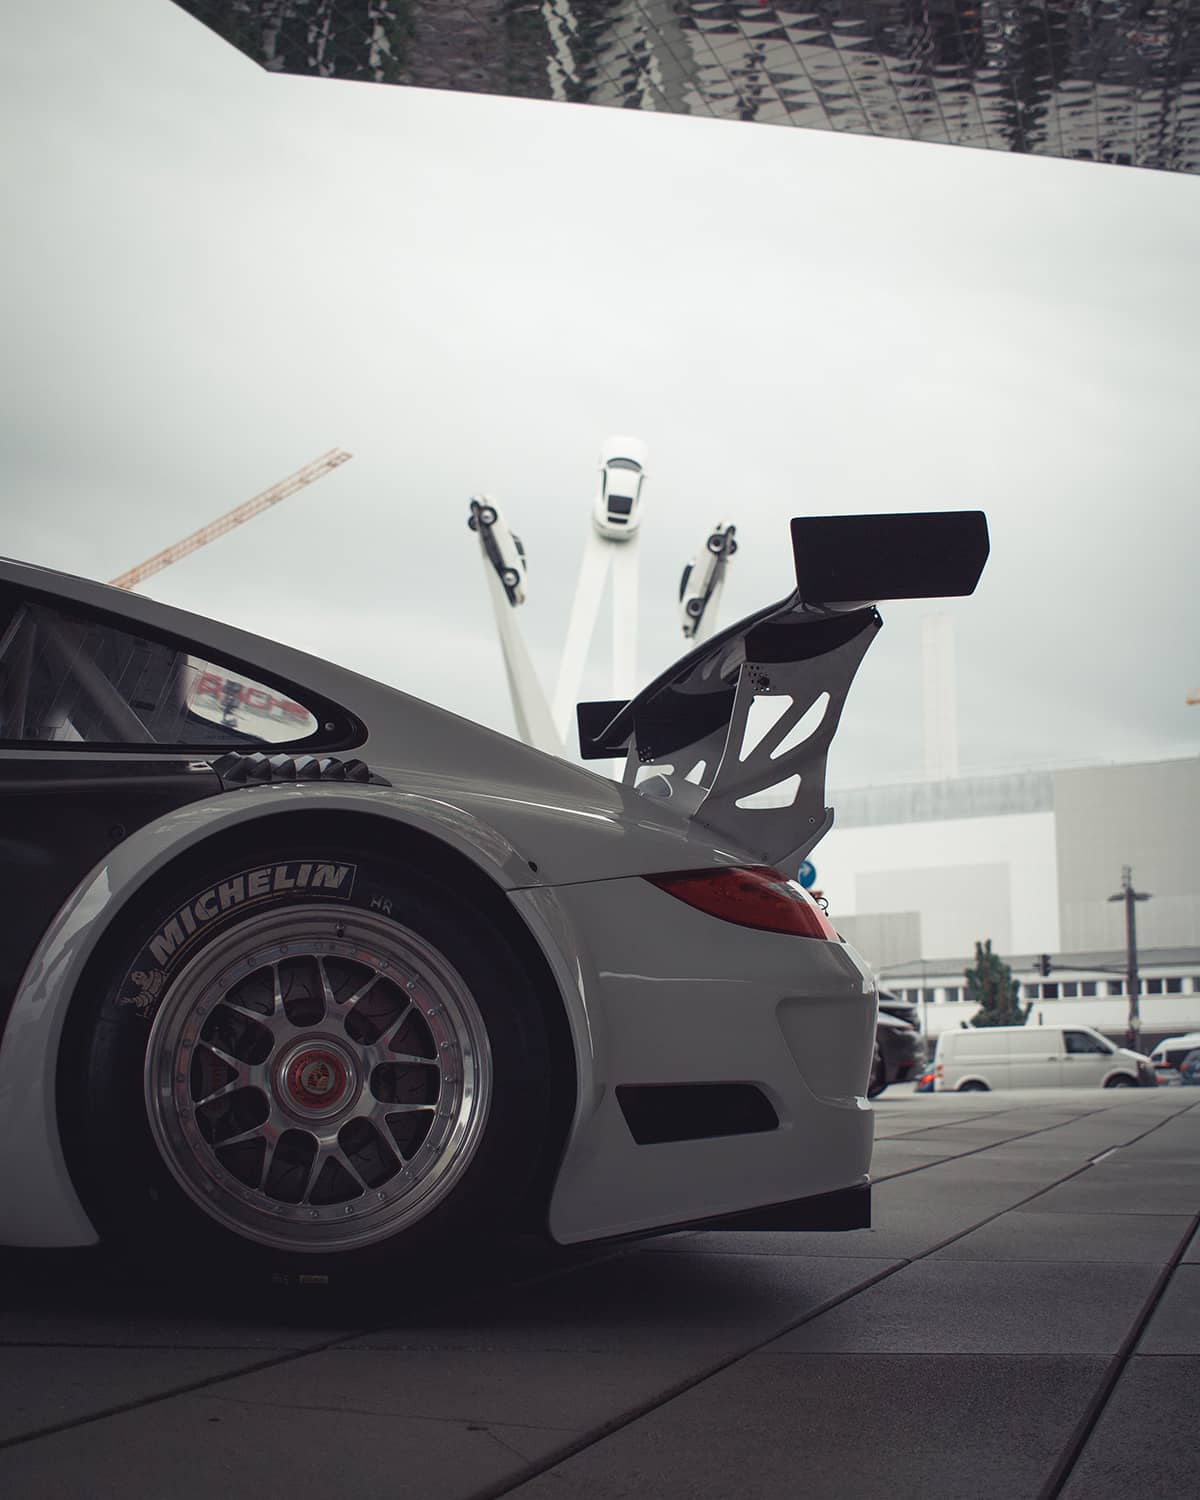 Porsche 997 Race wheels and spoiler